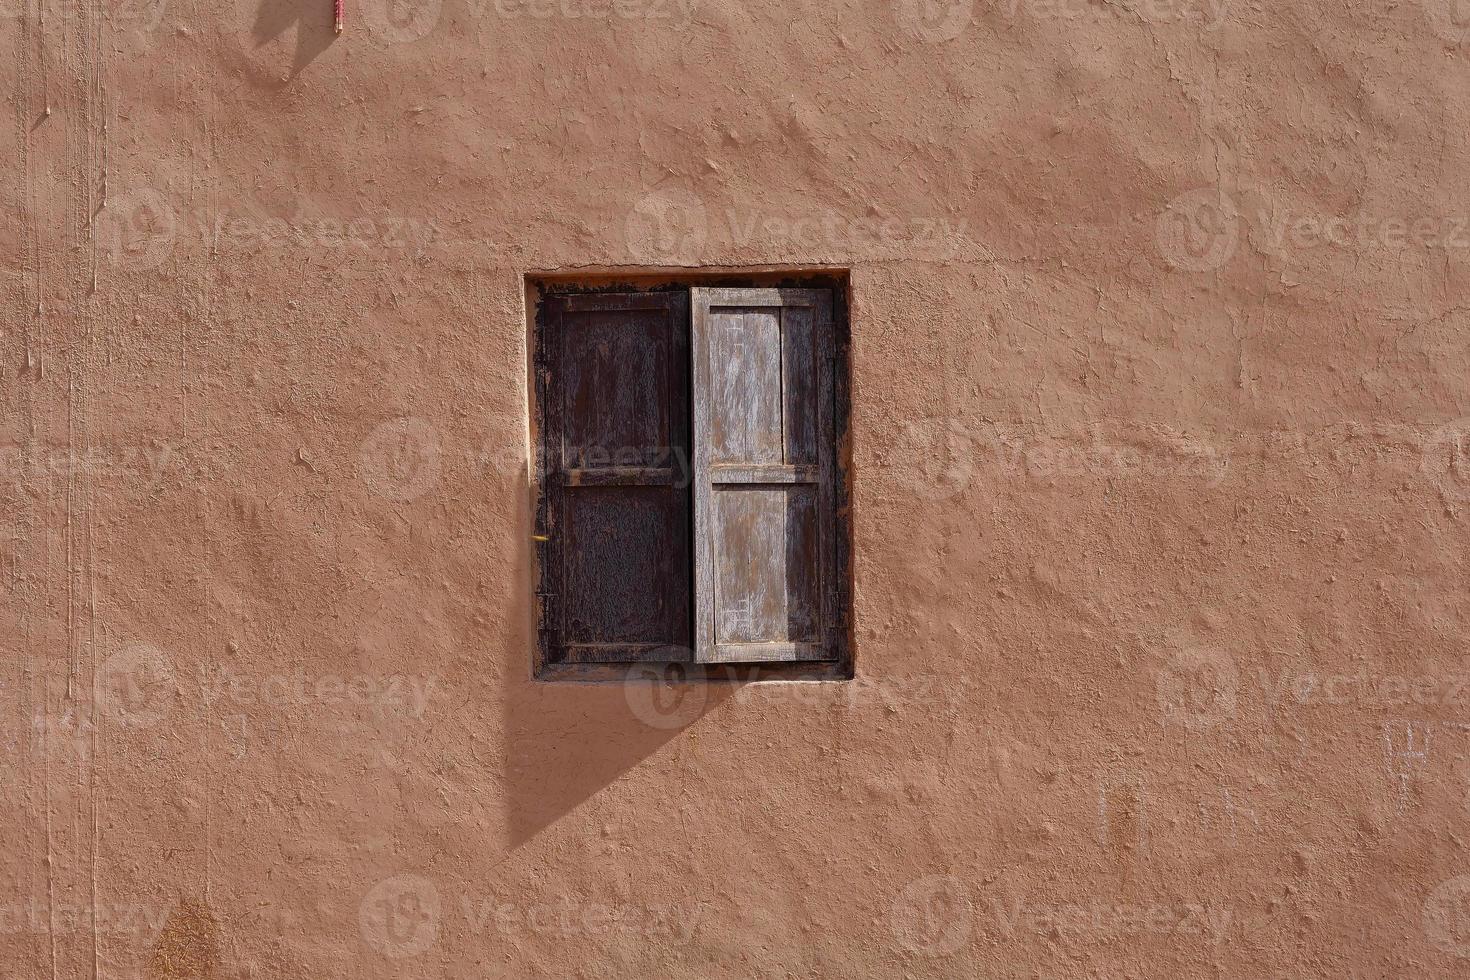 old house wall and wooden window Tuyoq village valleyXinjiang China. photo